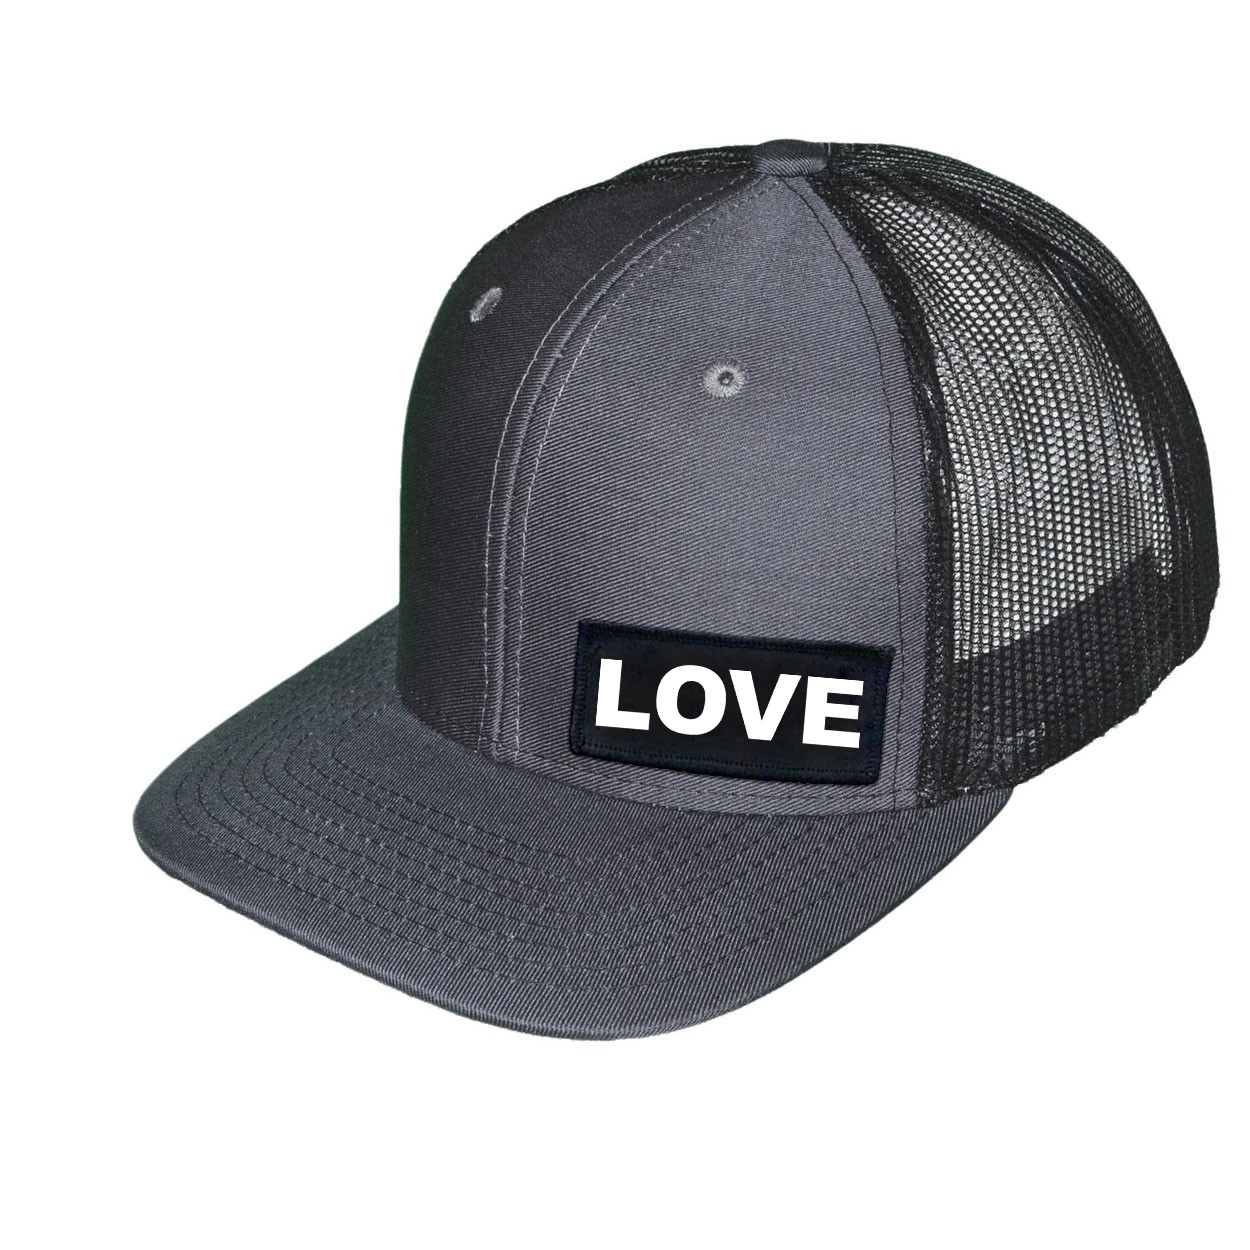 Love Brand Logo Night Out Woven Patch Snapback Trucker Hat Dark Gray/Black